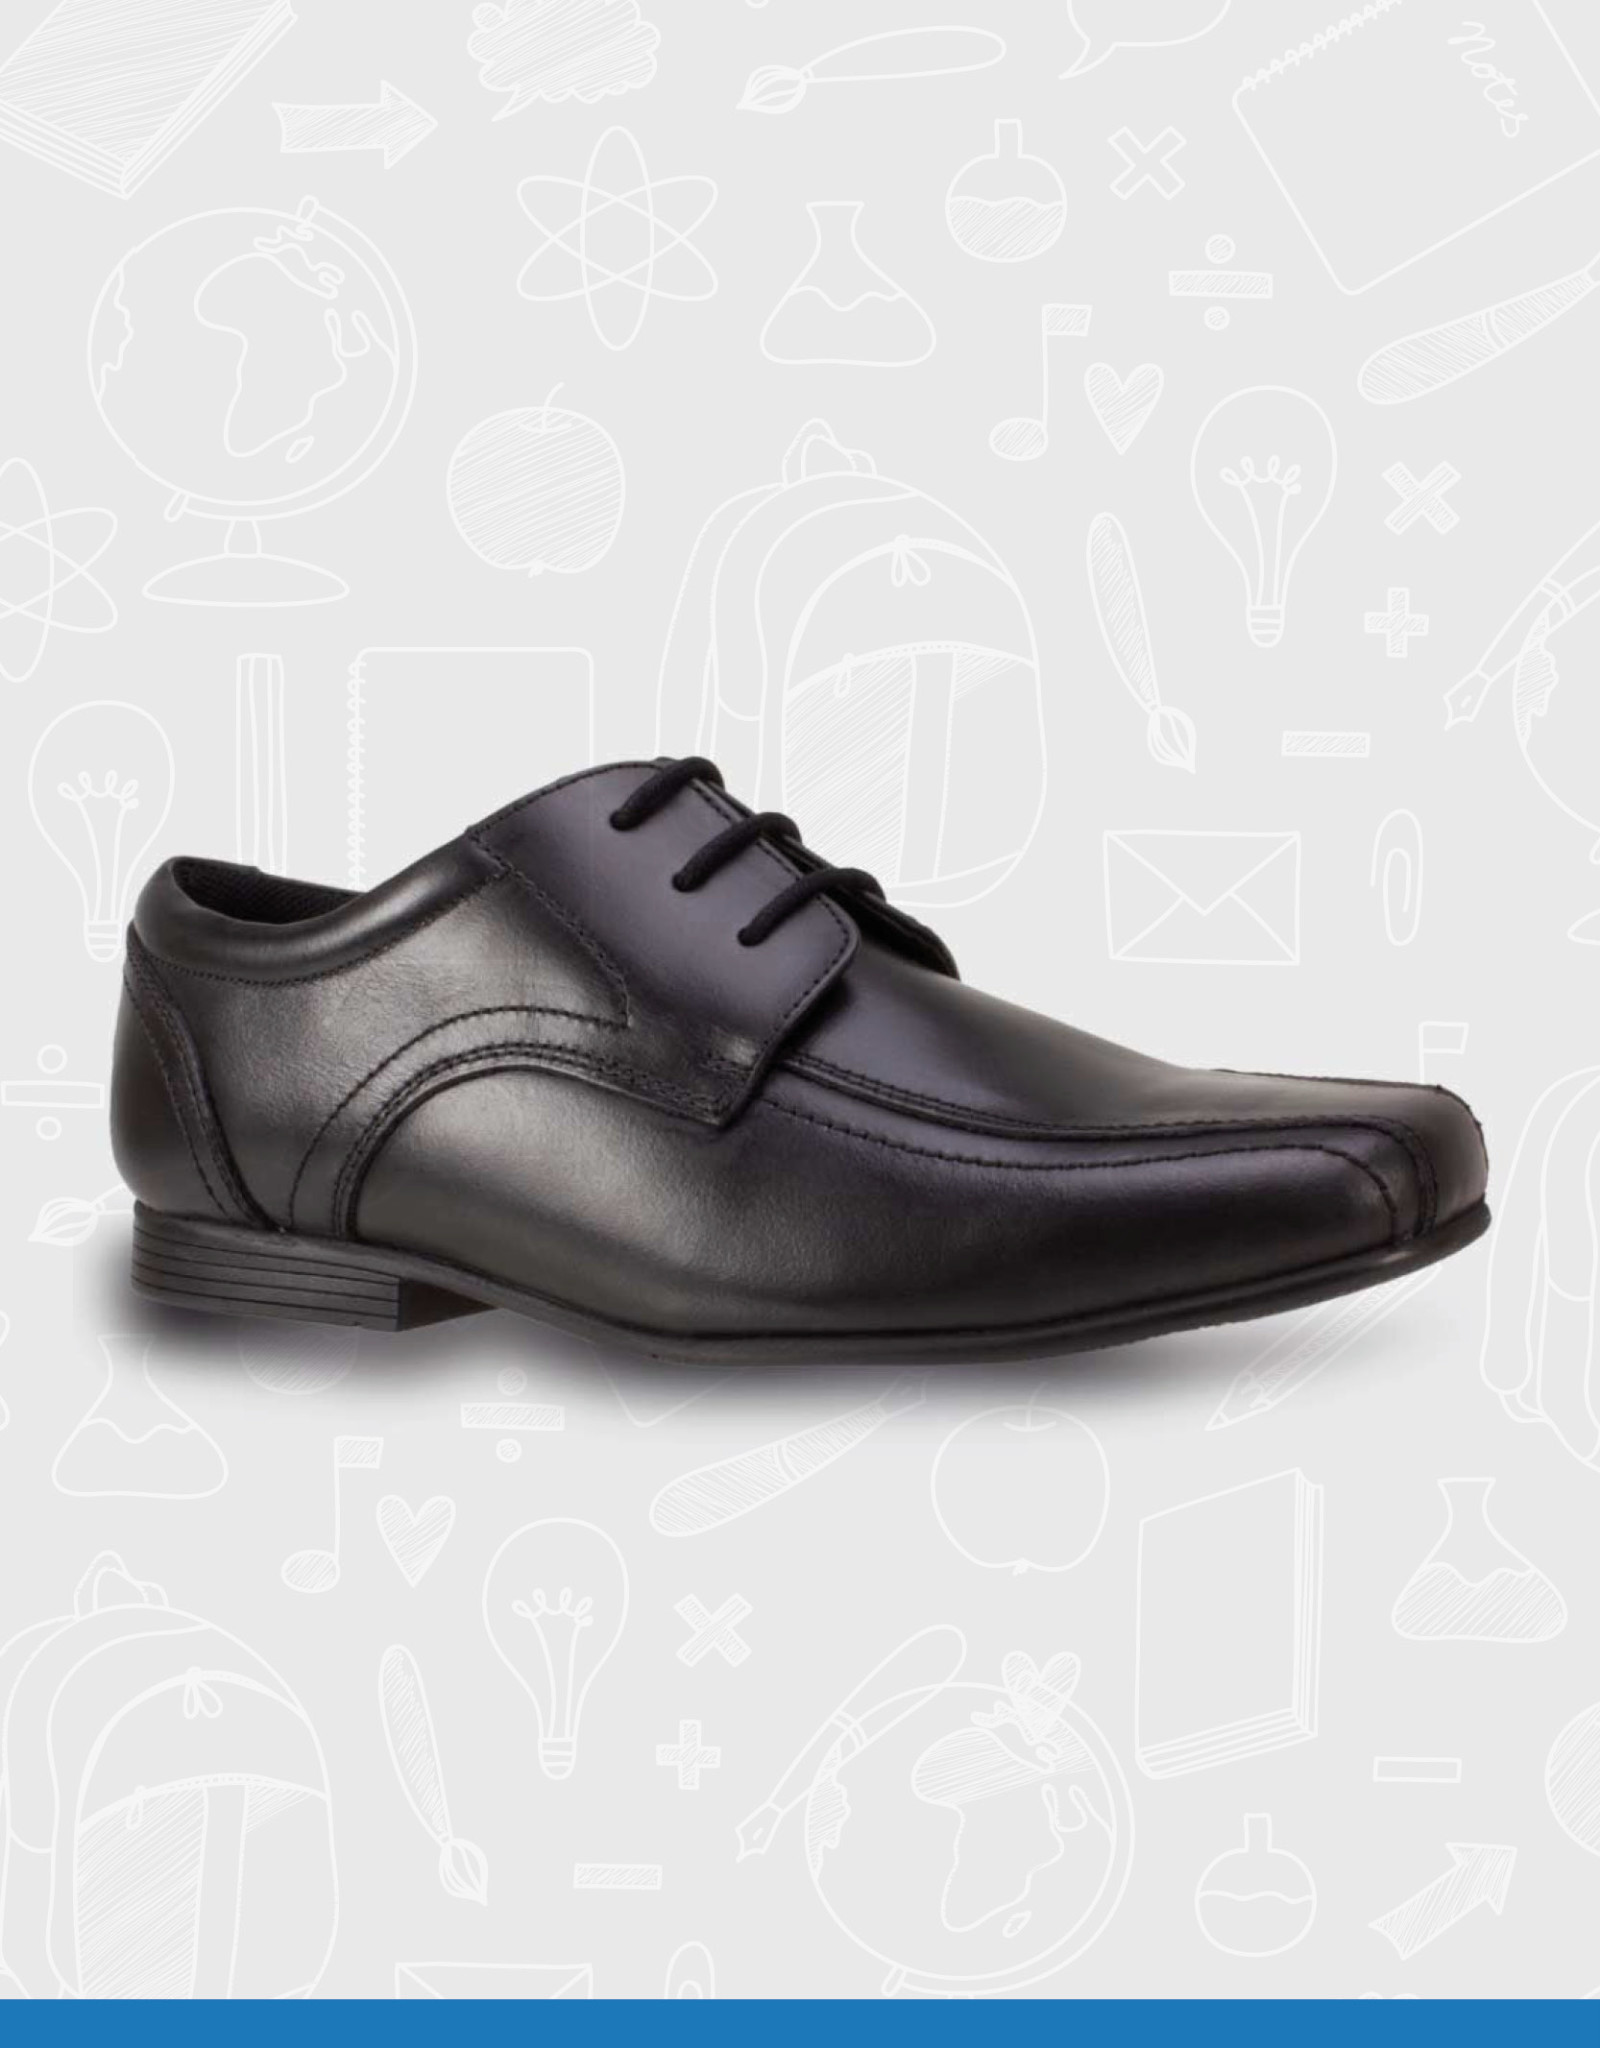 Term Finn Leather Shoe (M17AB10)